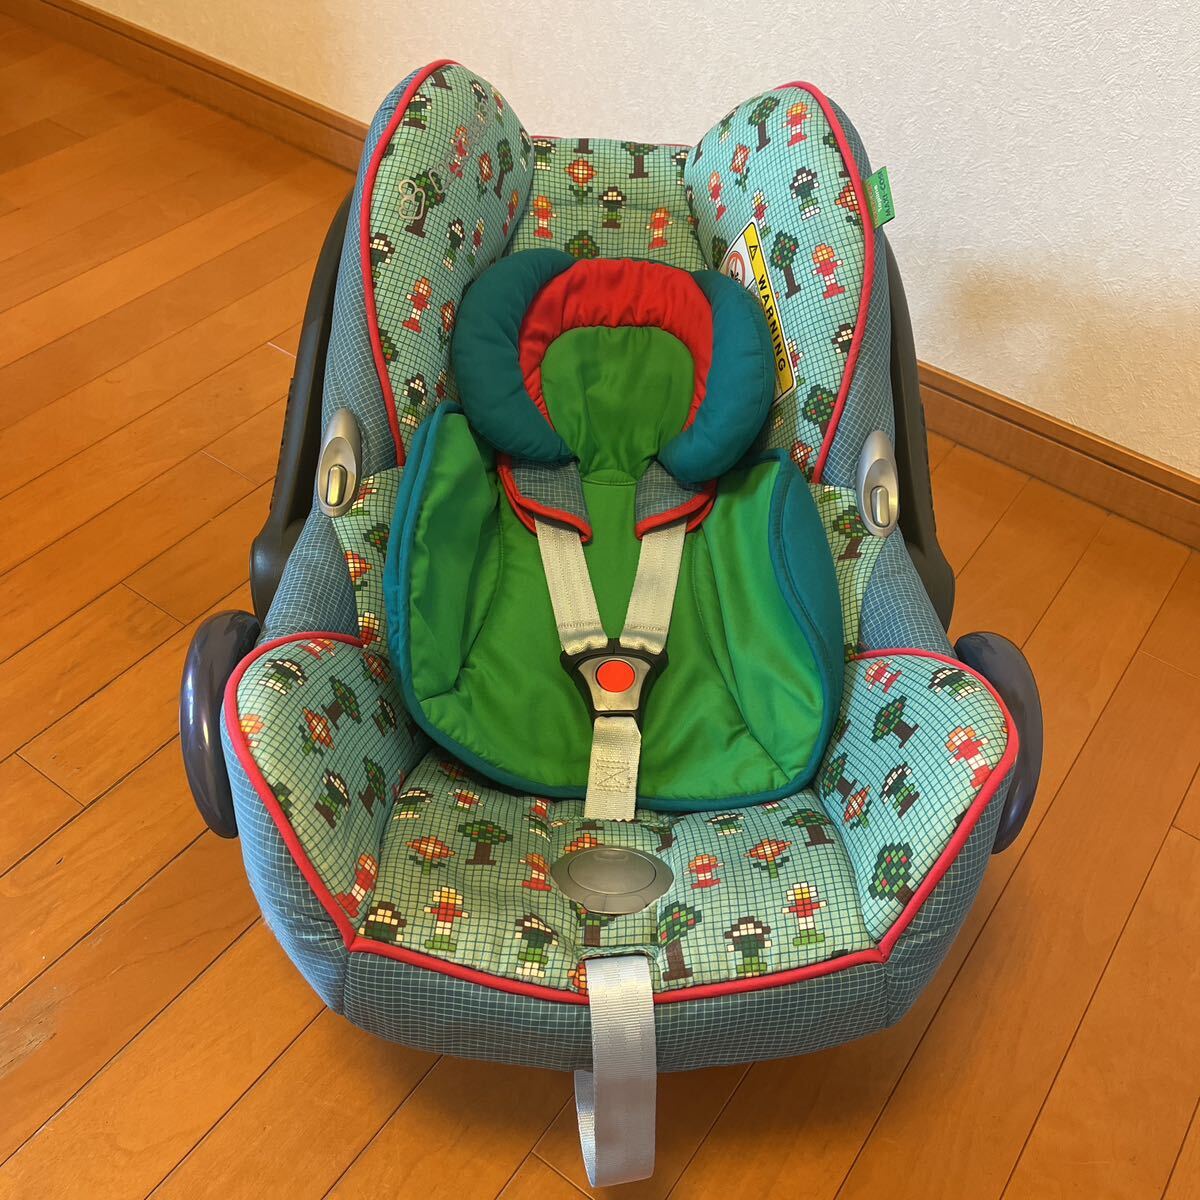  детское кресло maxi kosiMAXI-COSI детское кресло 